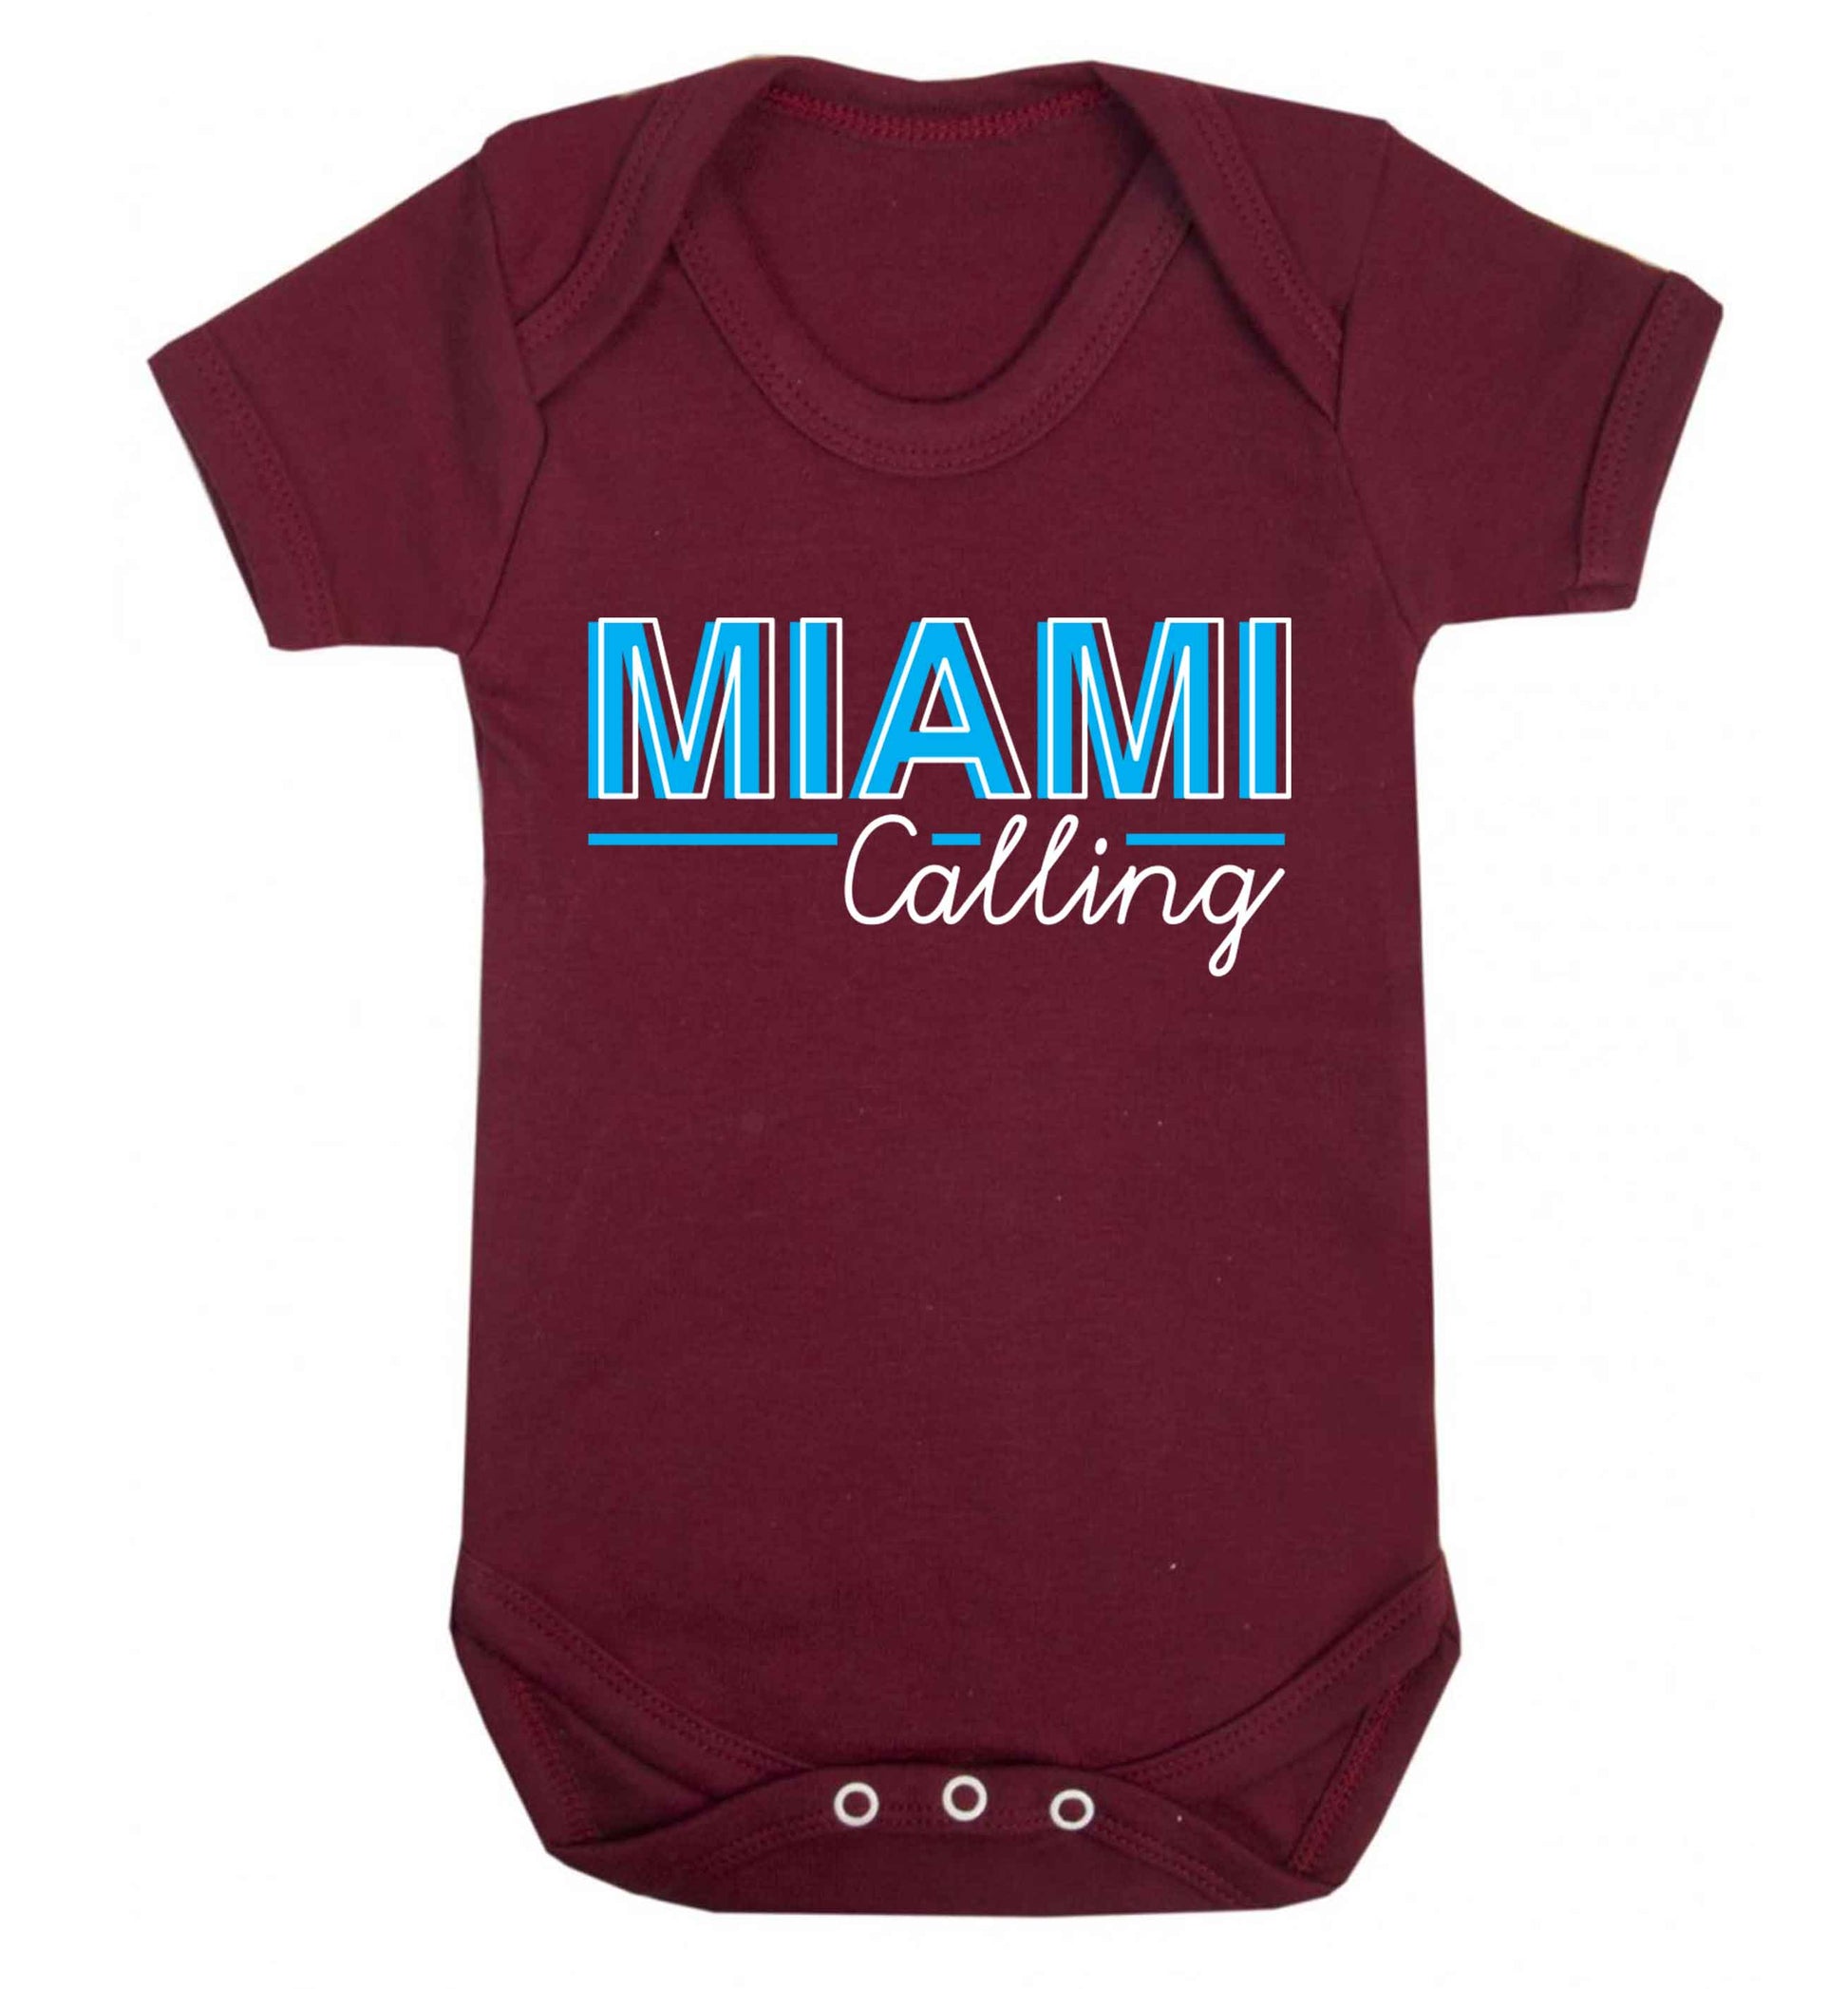 Miami calling Baby Vest maroon 18-24 months